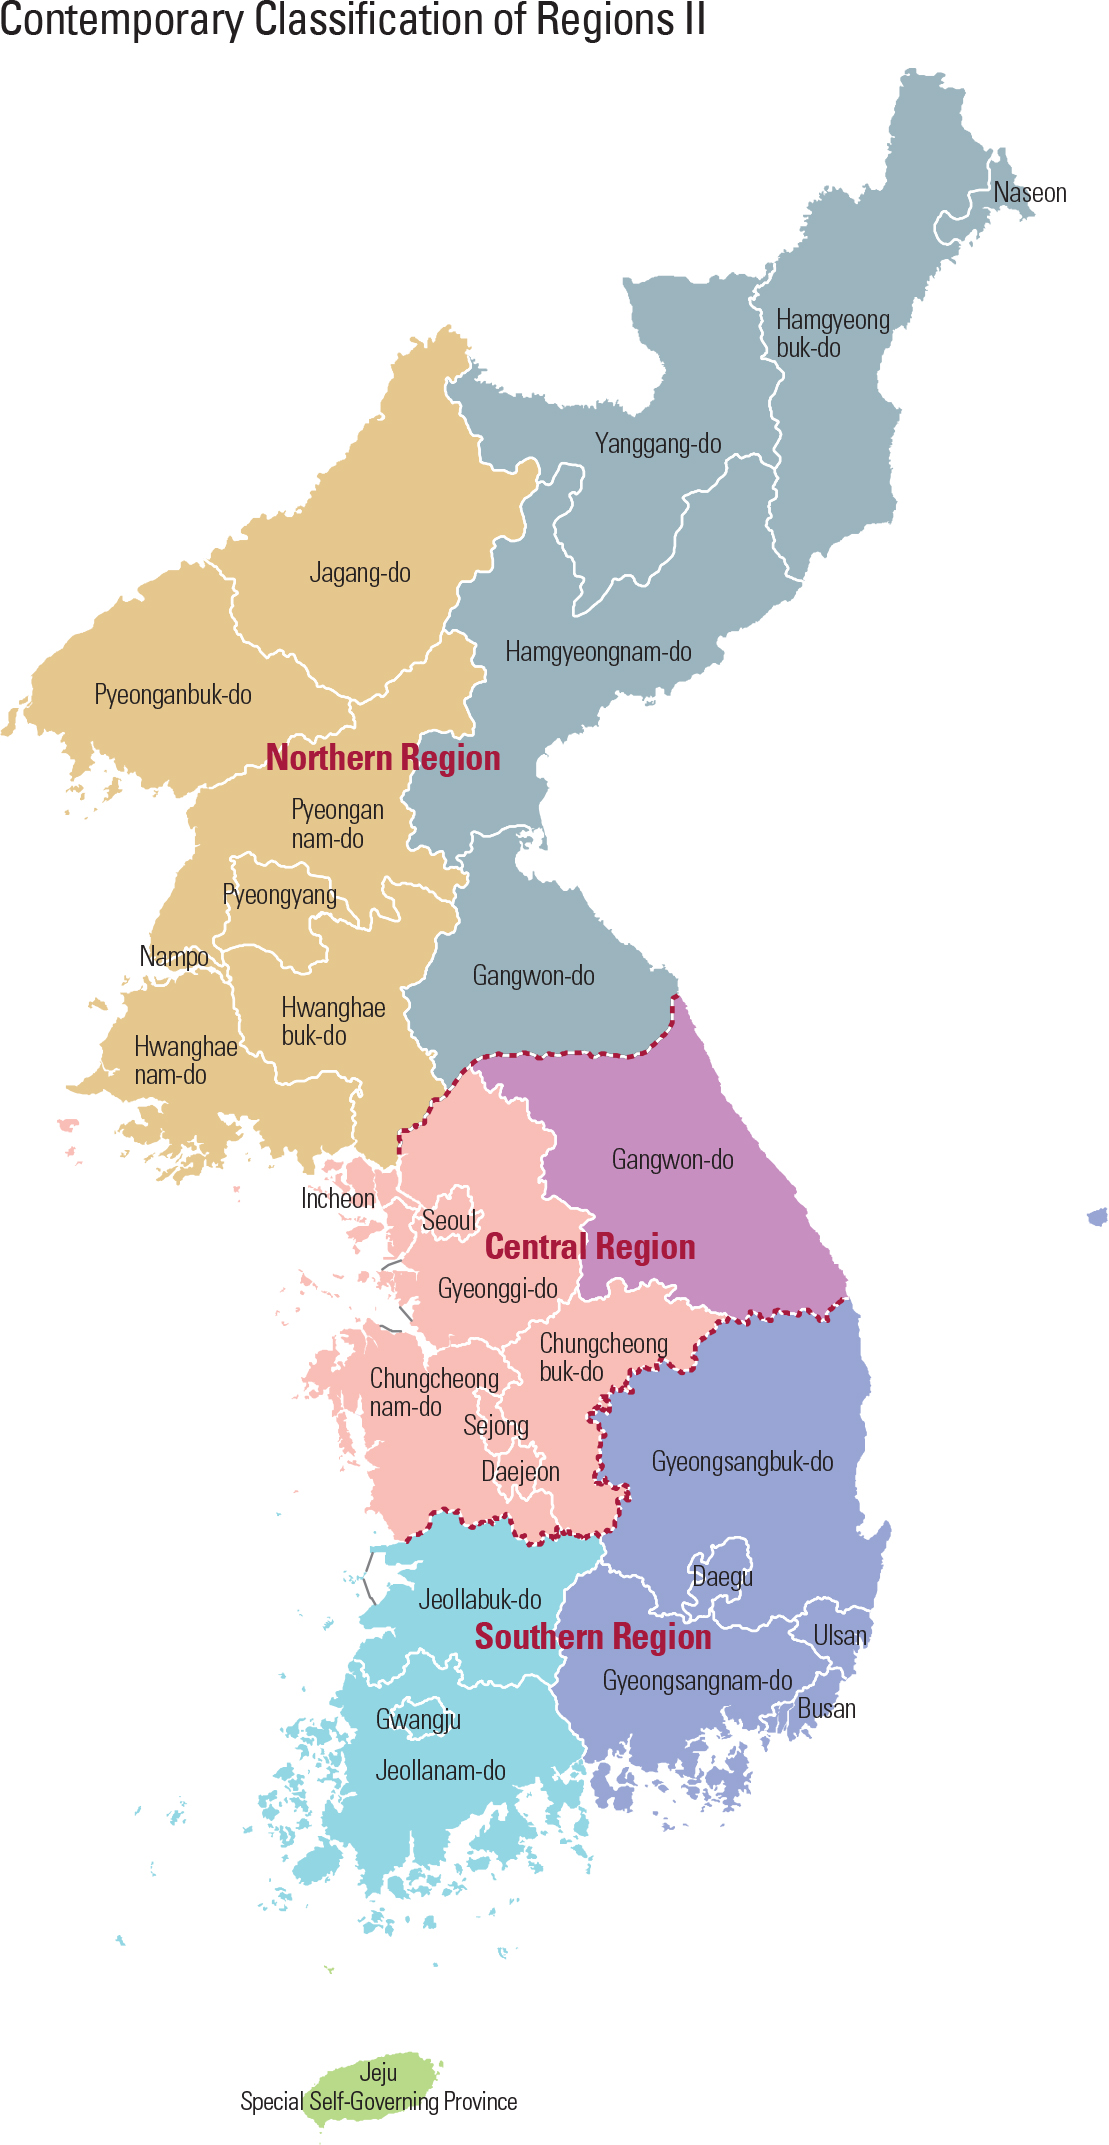  Contemporary Classification of Regions II